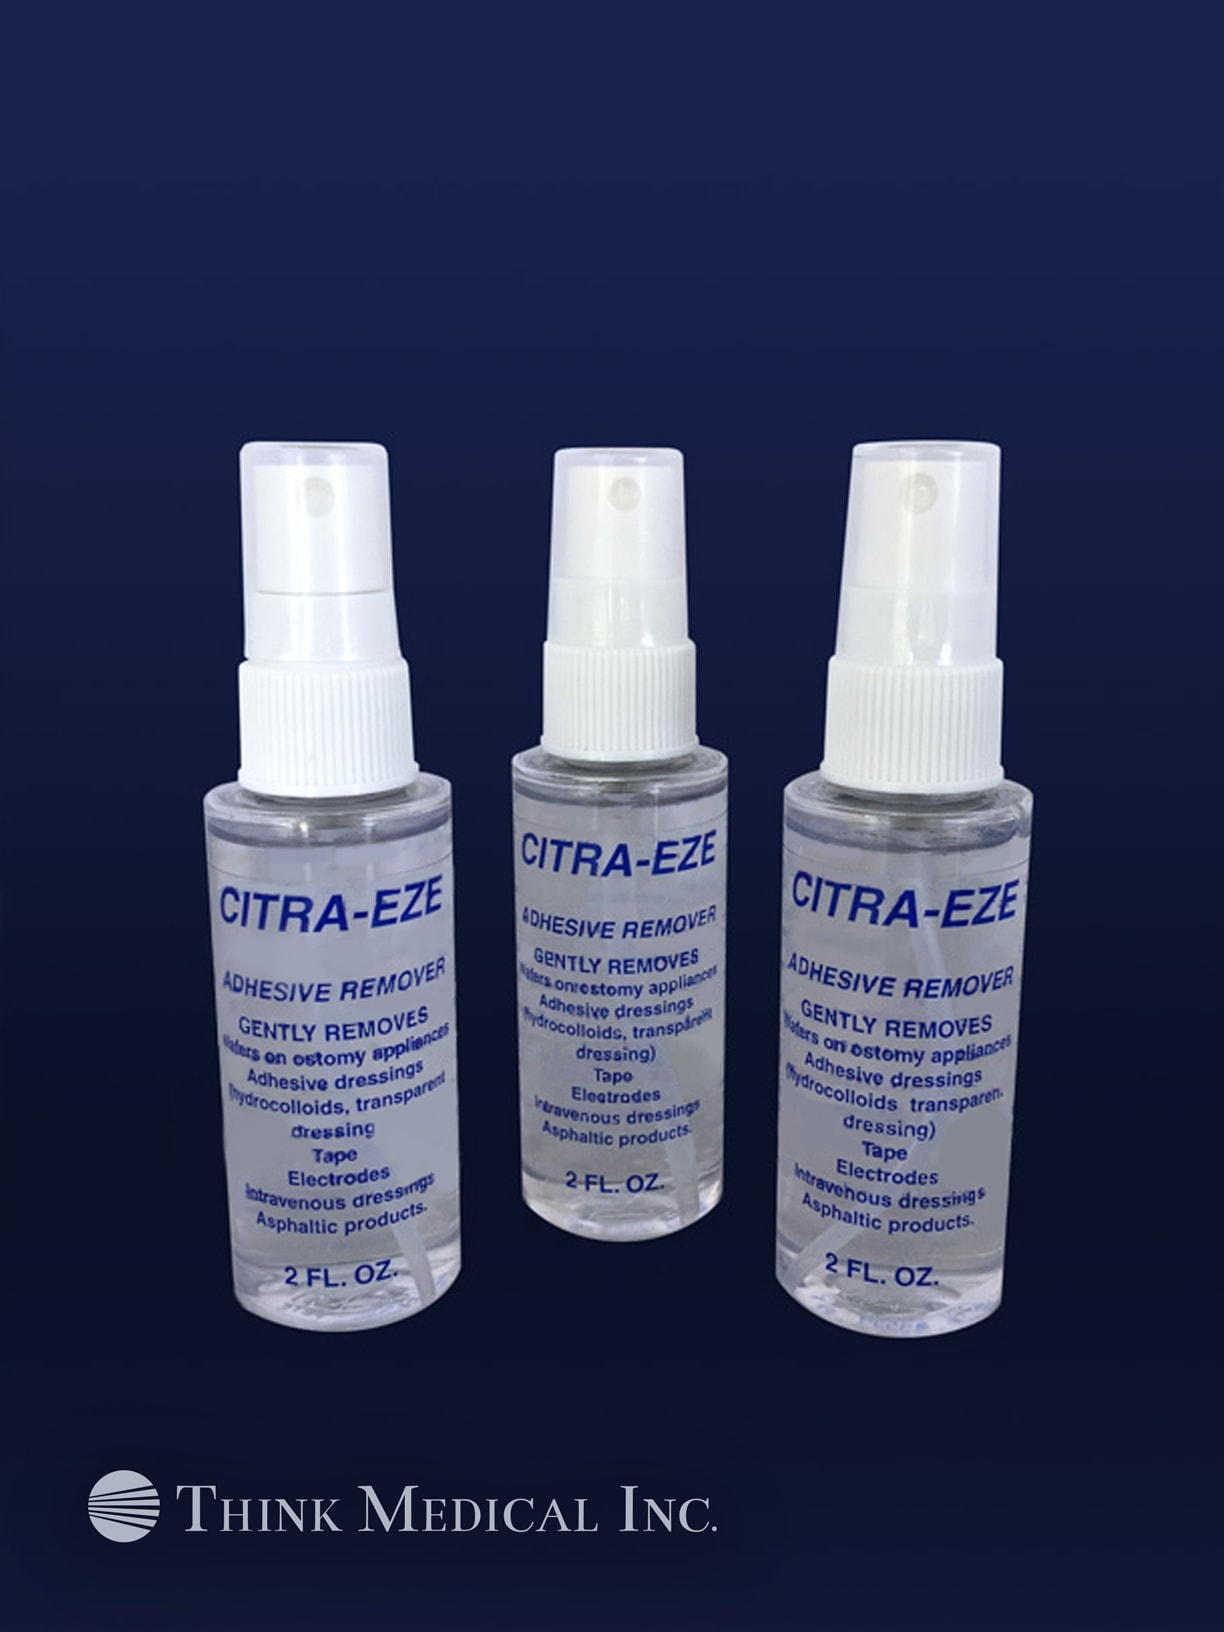 CITRA-EZE Medical Adhesive Remover - Think Medical, Inc.